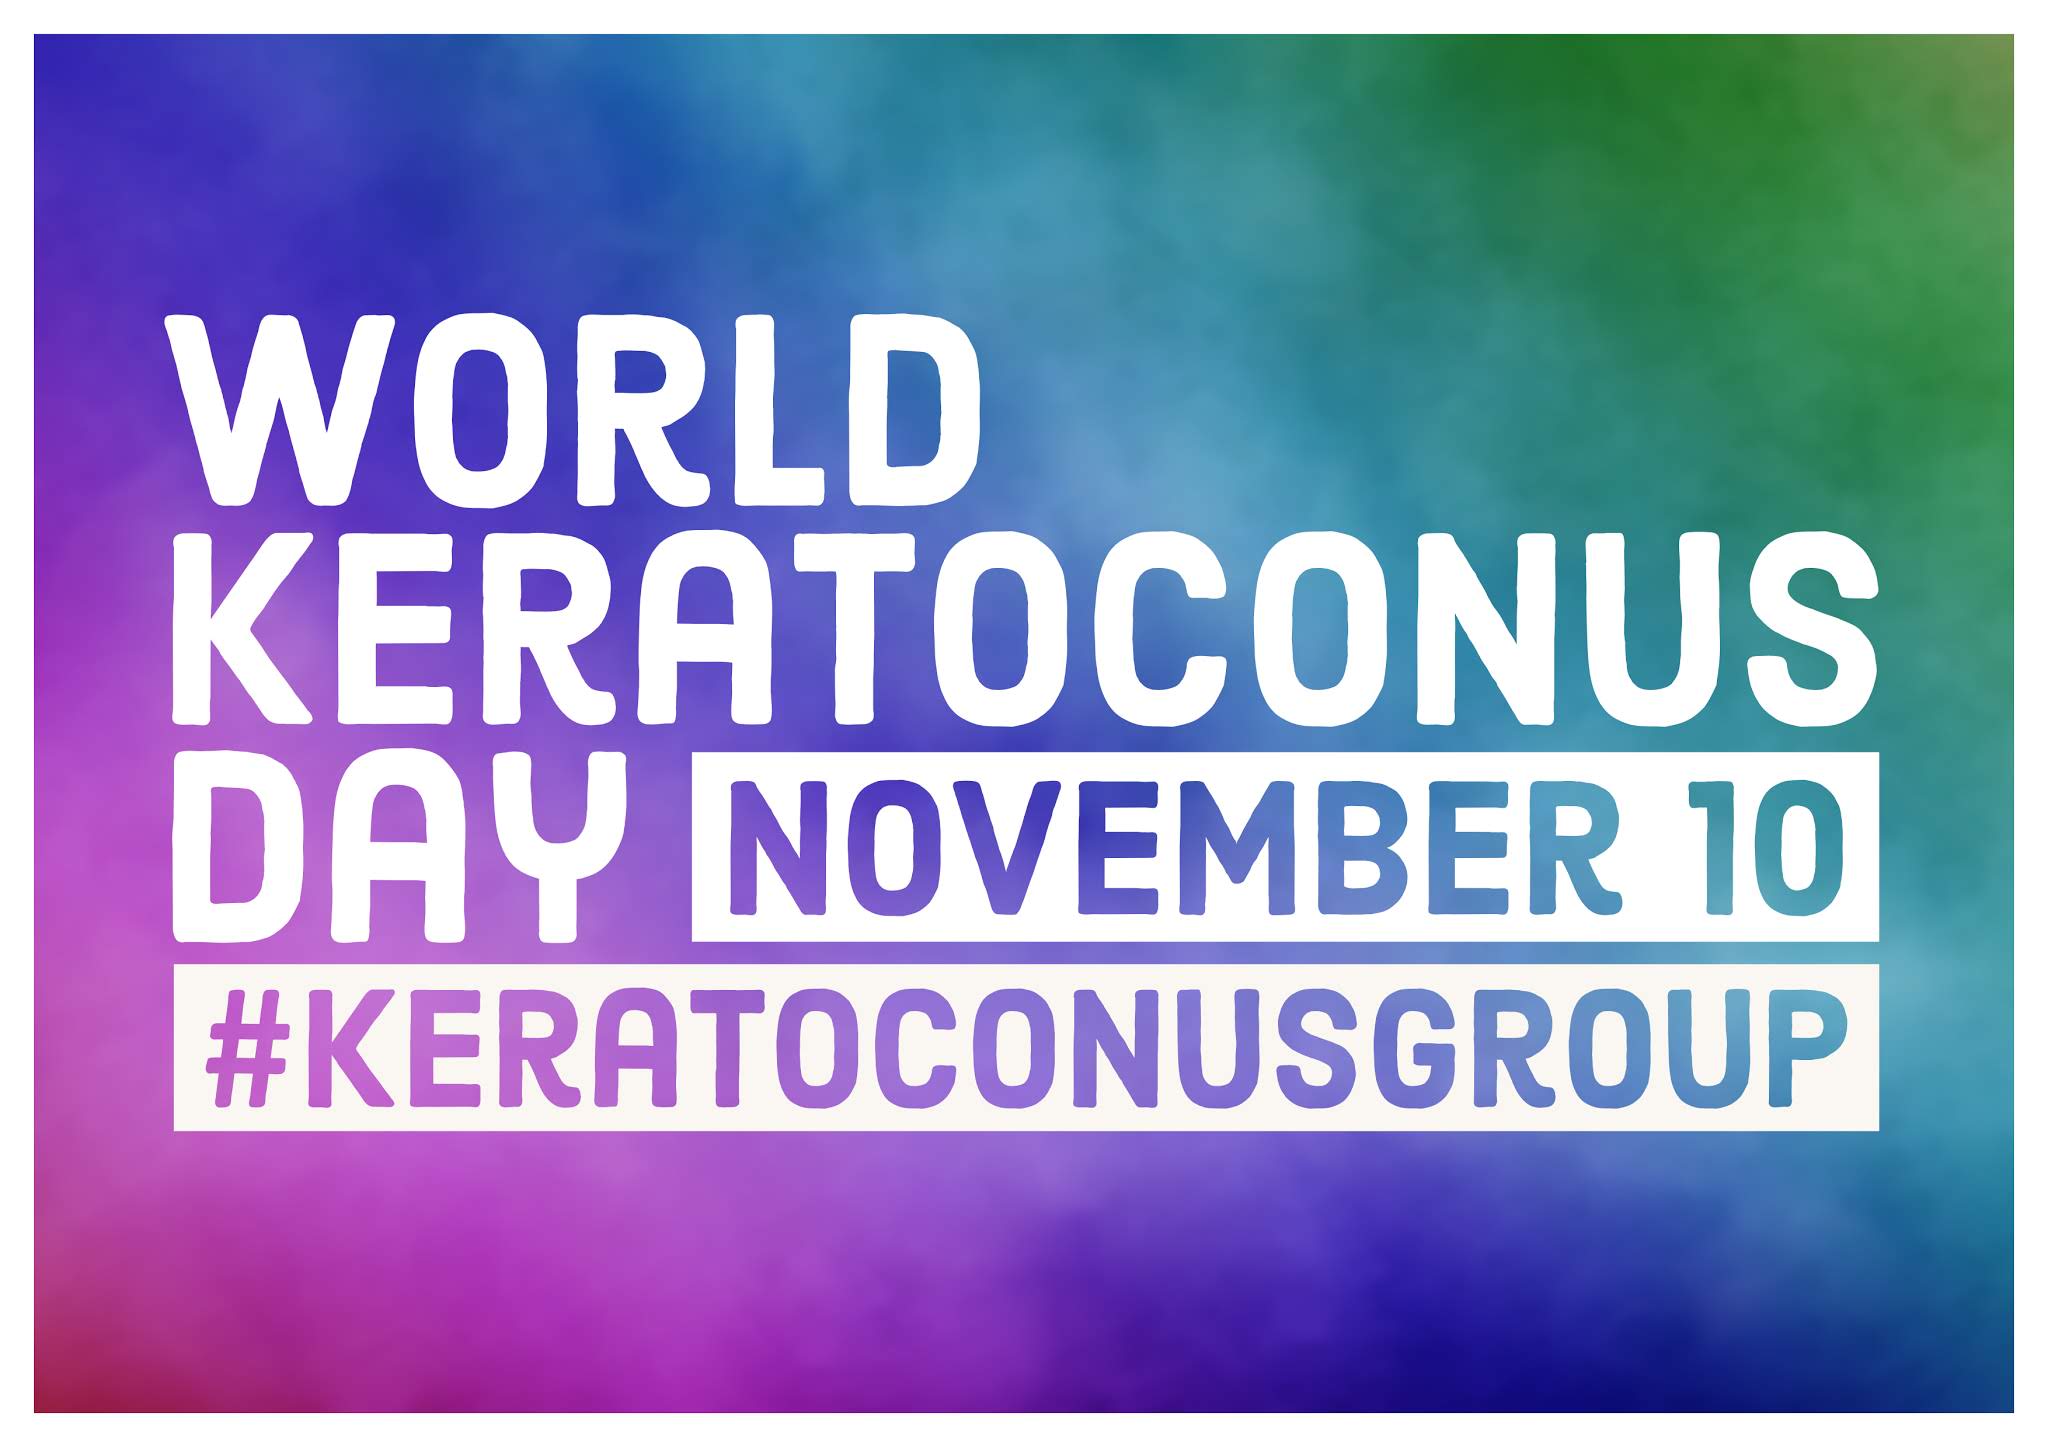 National Keratoconus Day 2019 Poster